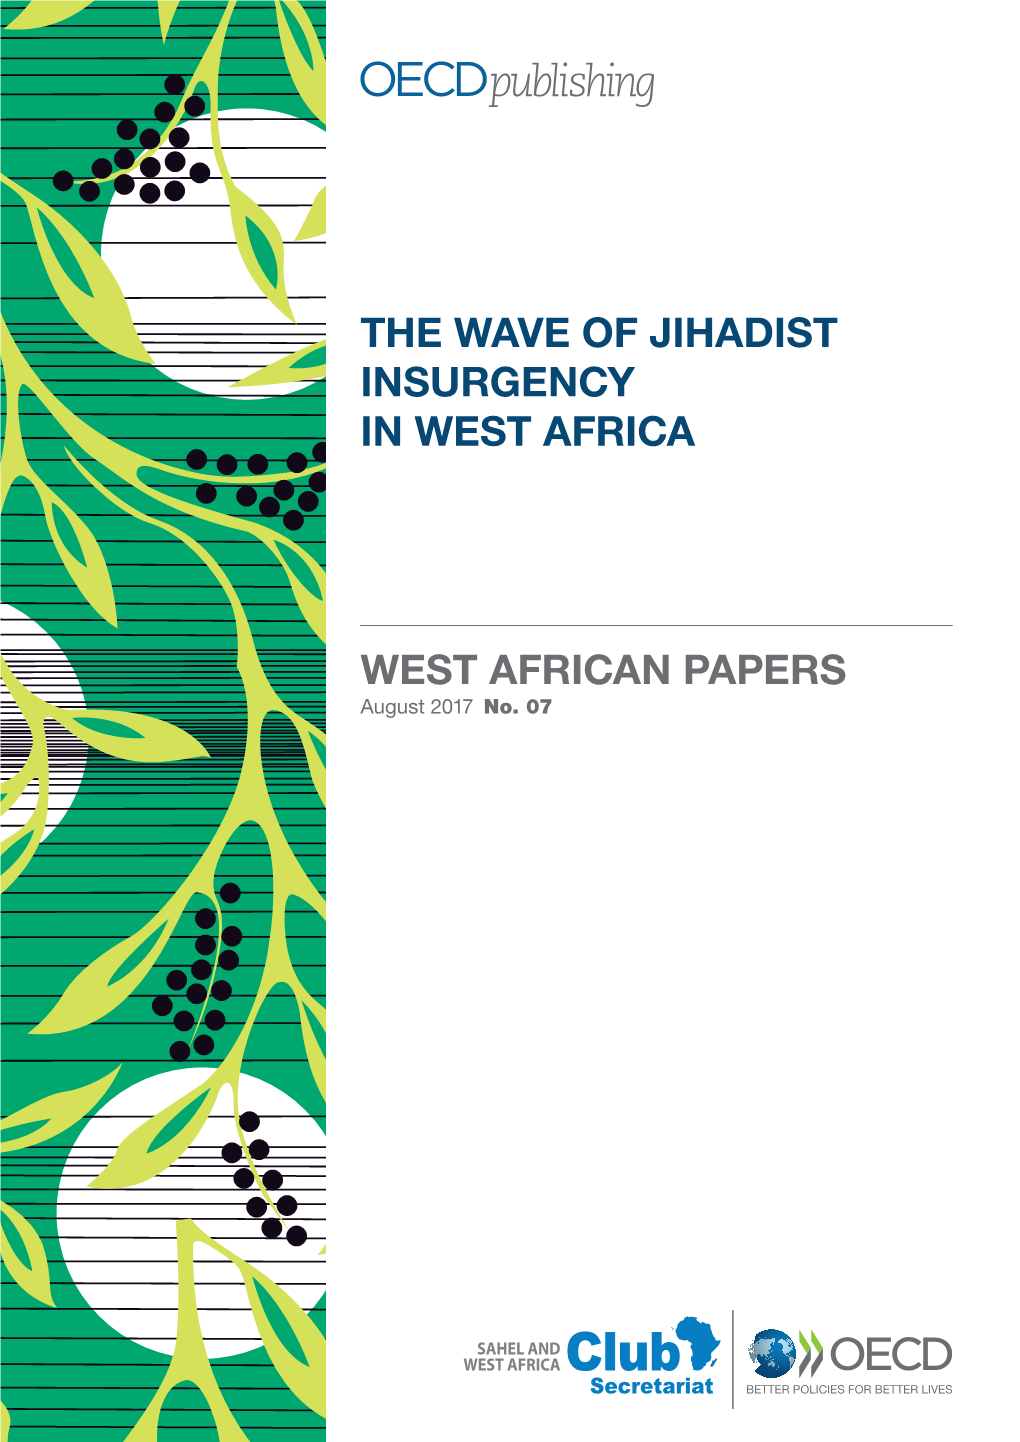 The Wave of Jihadist Insurgency in West Africa